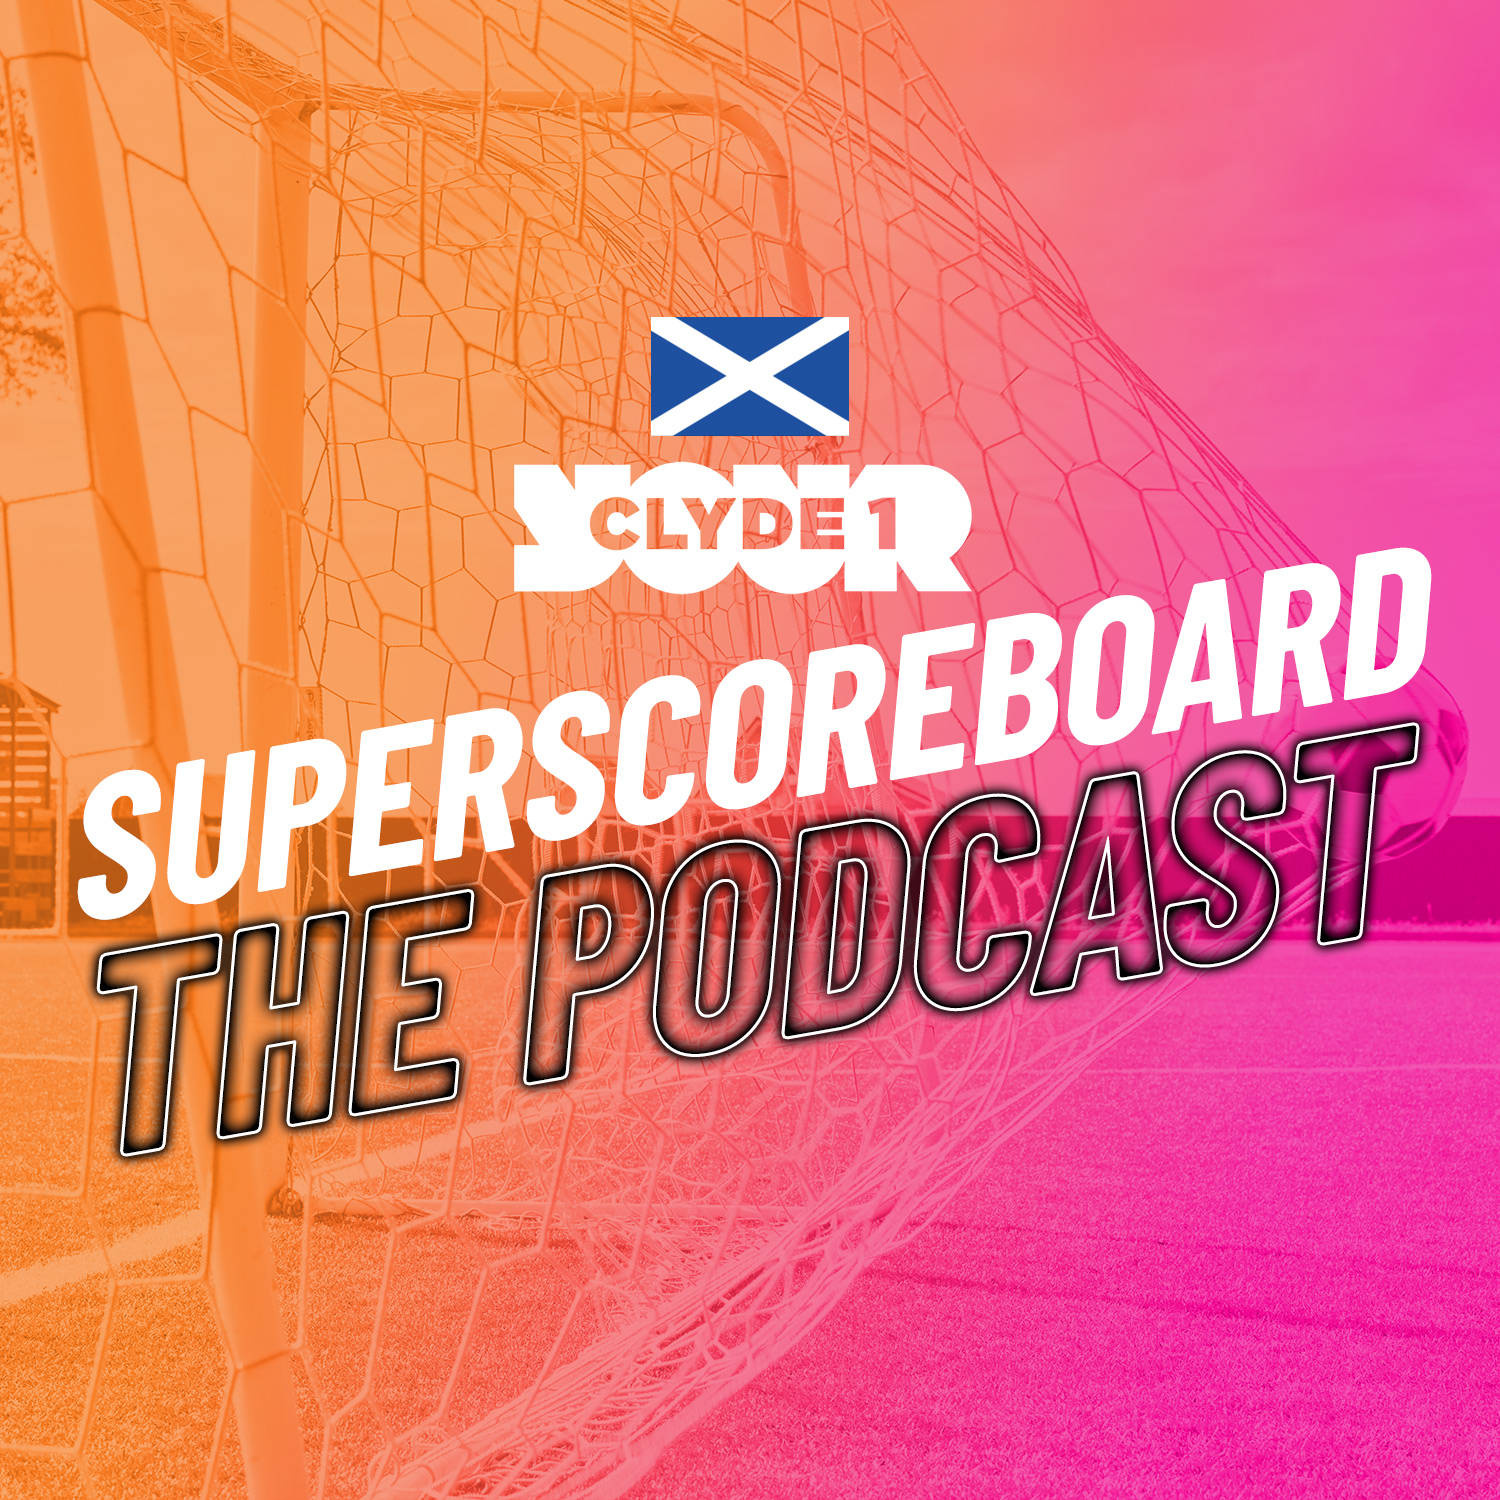 Thursday 8th February Clyde 1 Superscoreboard